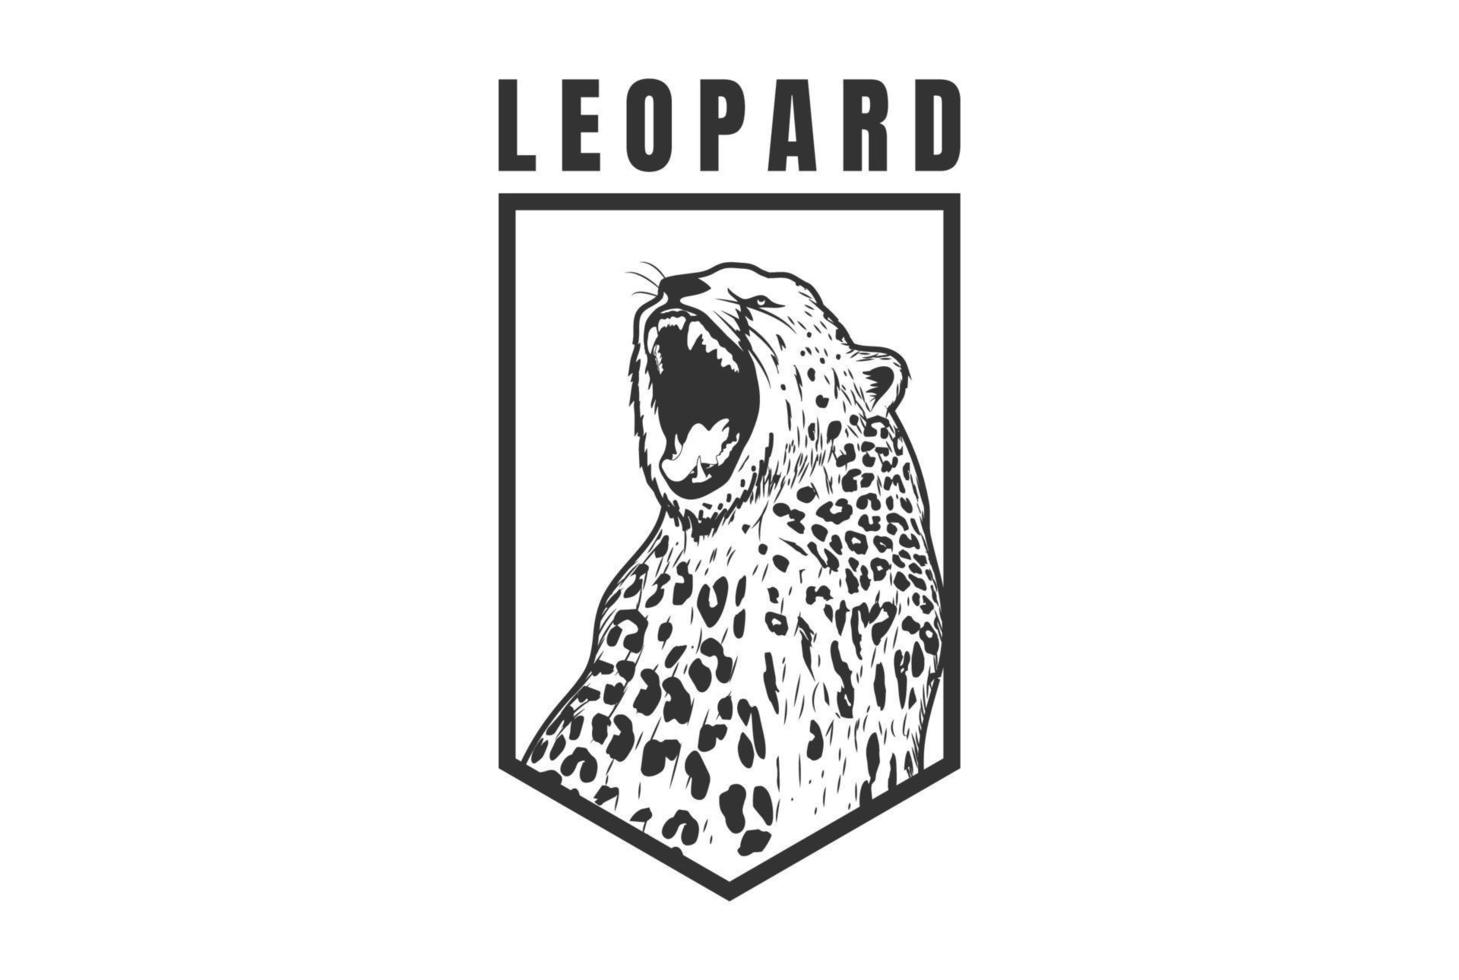 Vintage ▾ arrabbiato ruggente tigre leopardo giaguaro ghepardo scudo logo design vettore